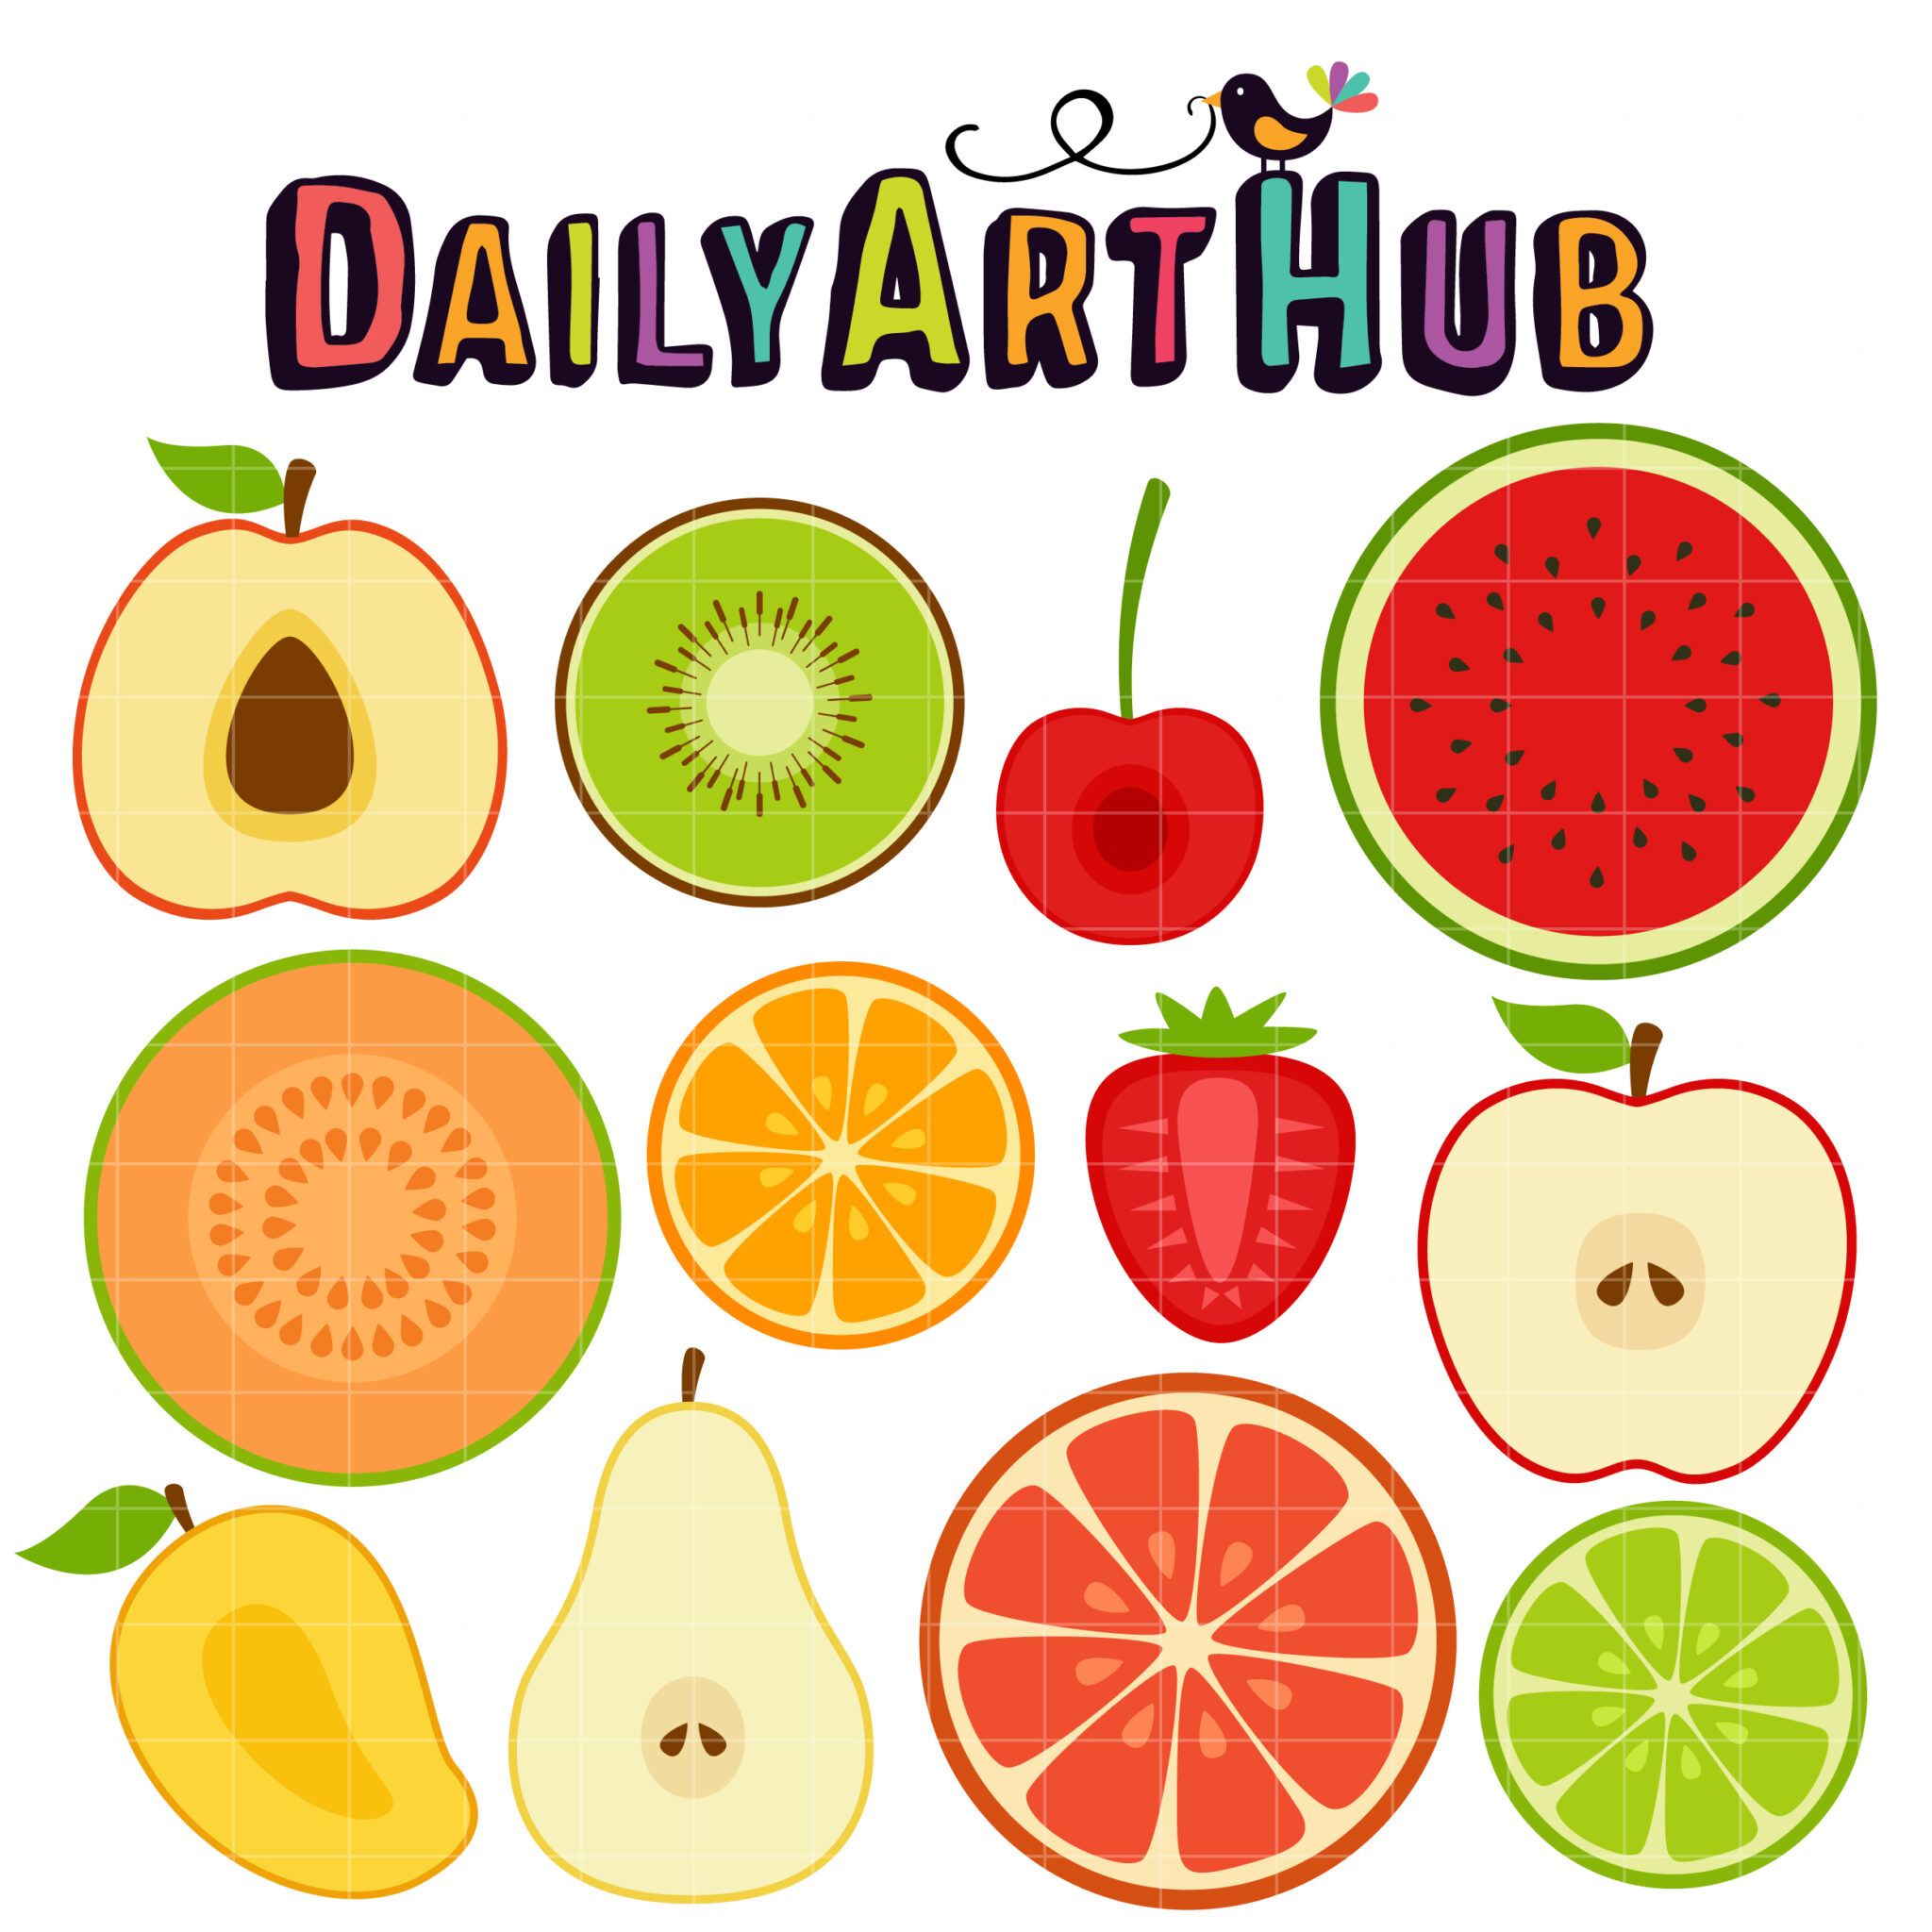 https://www.dailyarthub.com/wp-content/uploads/2017/08/Fruit-Slices-scaled.jpg